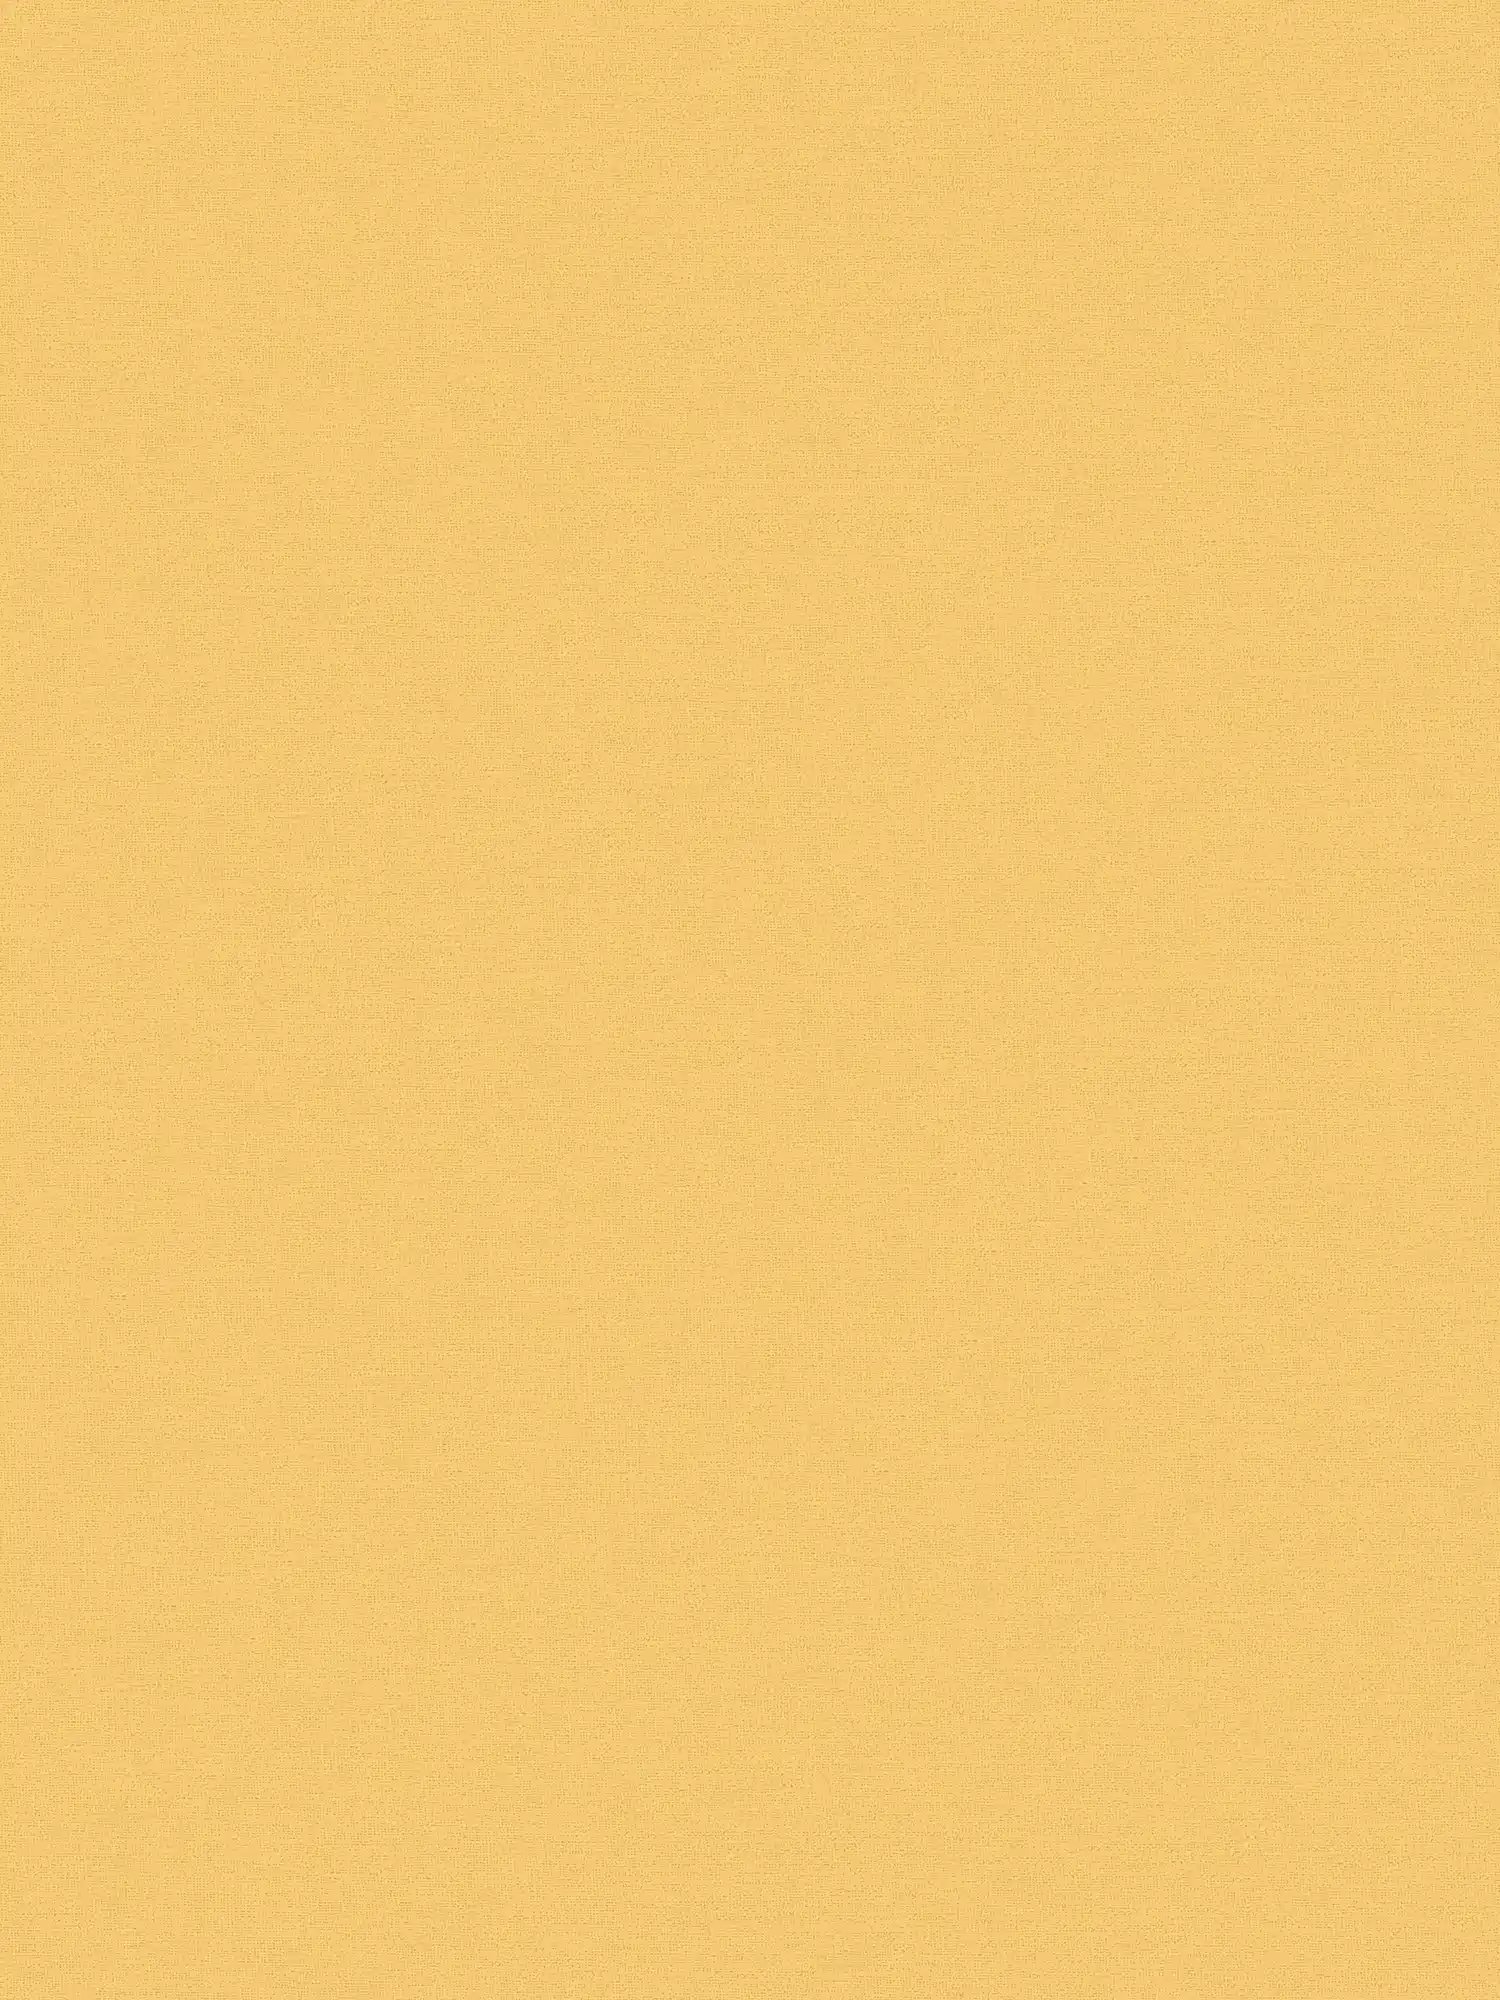 Yellow wallpaper from MICHALSKY monochrome & matte
